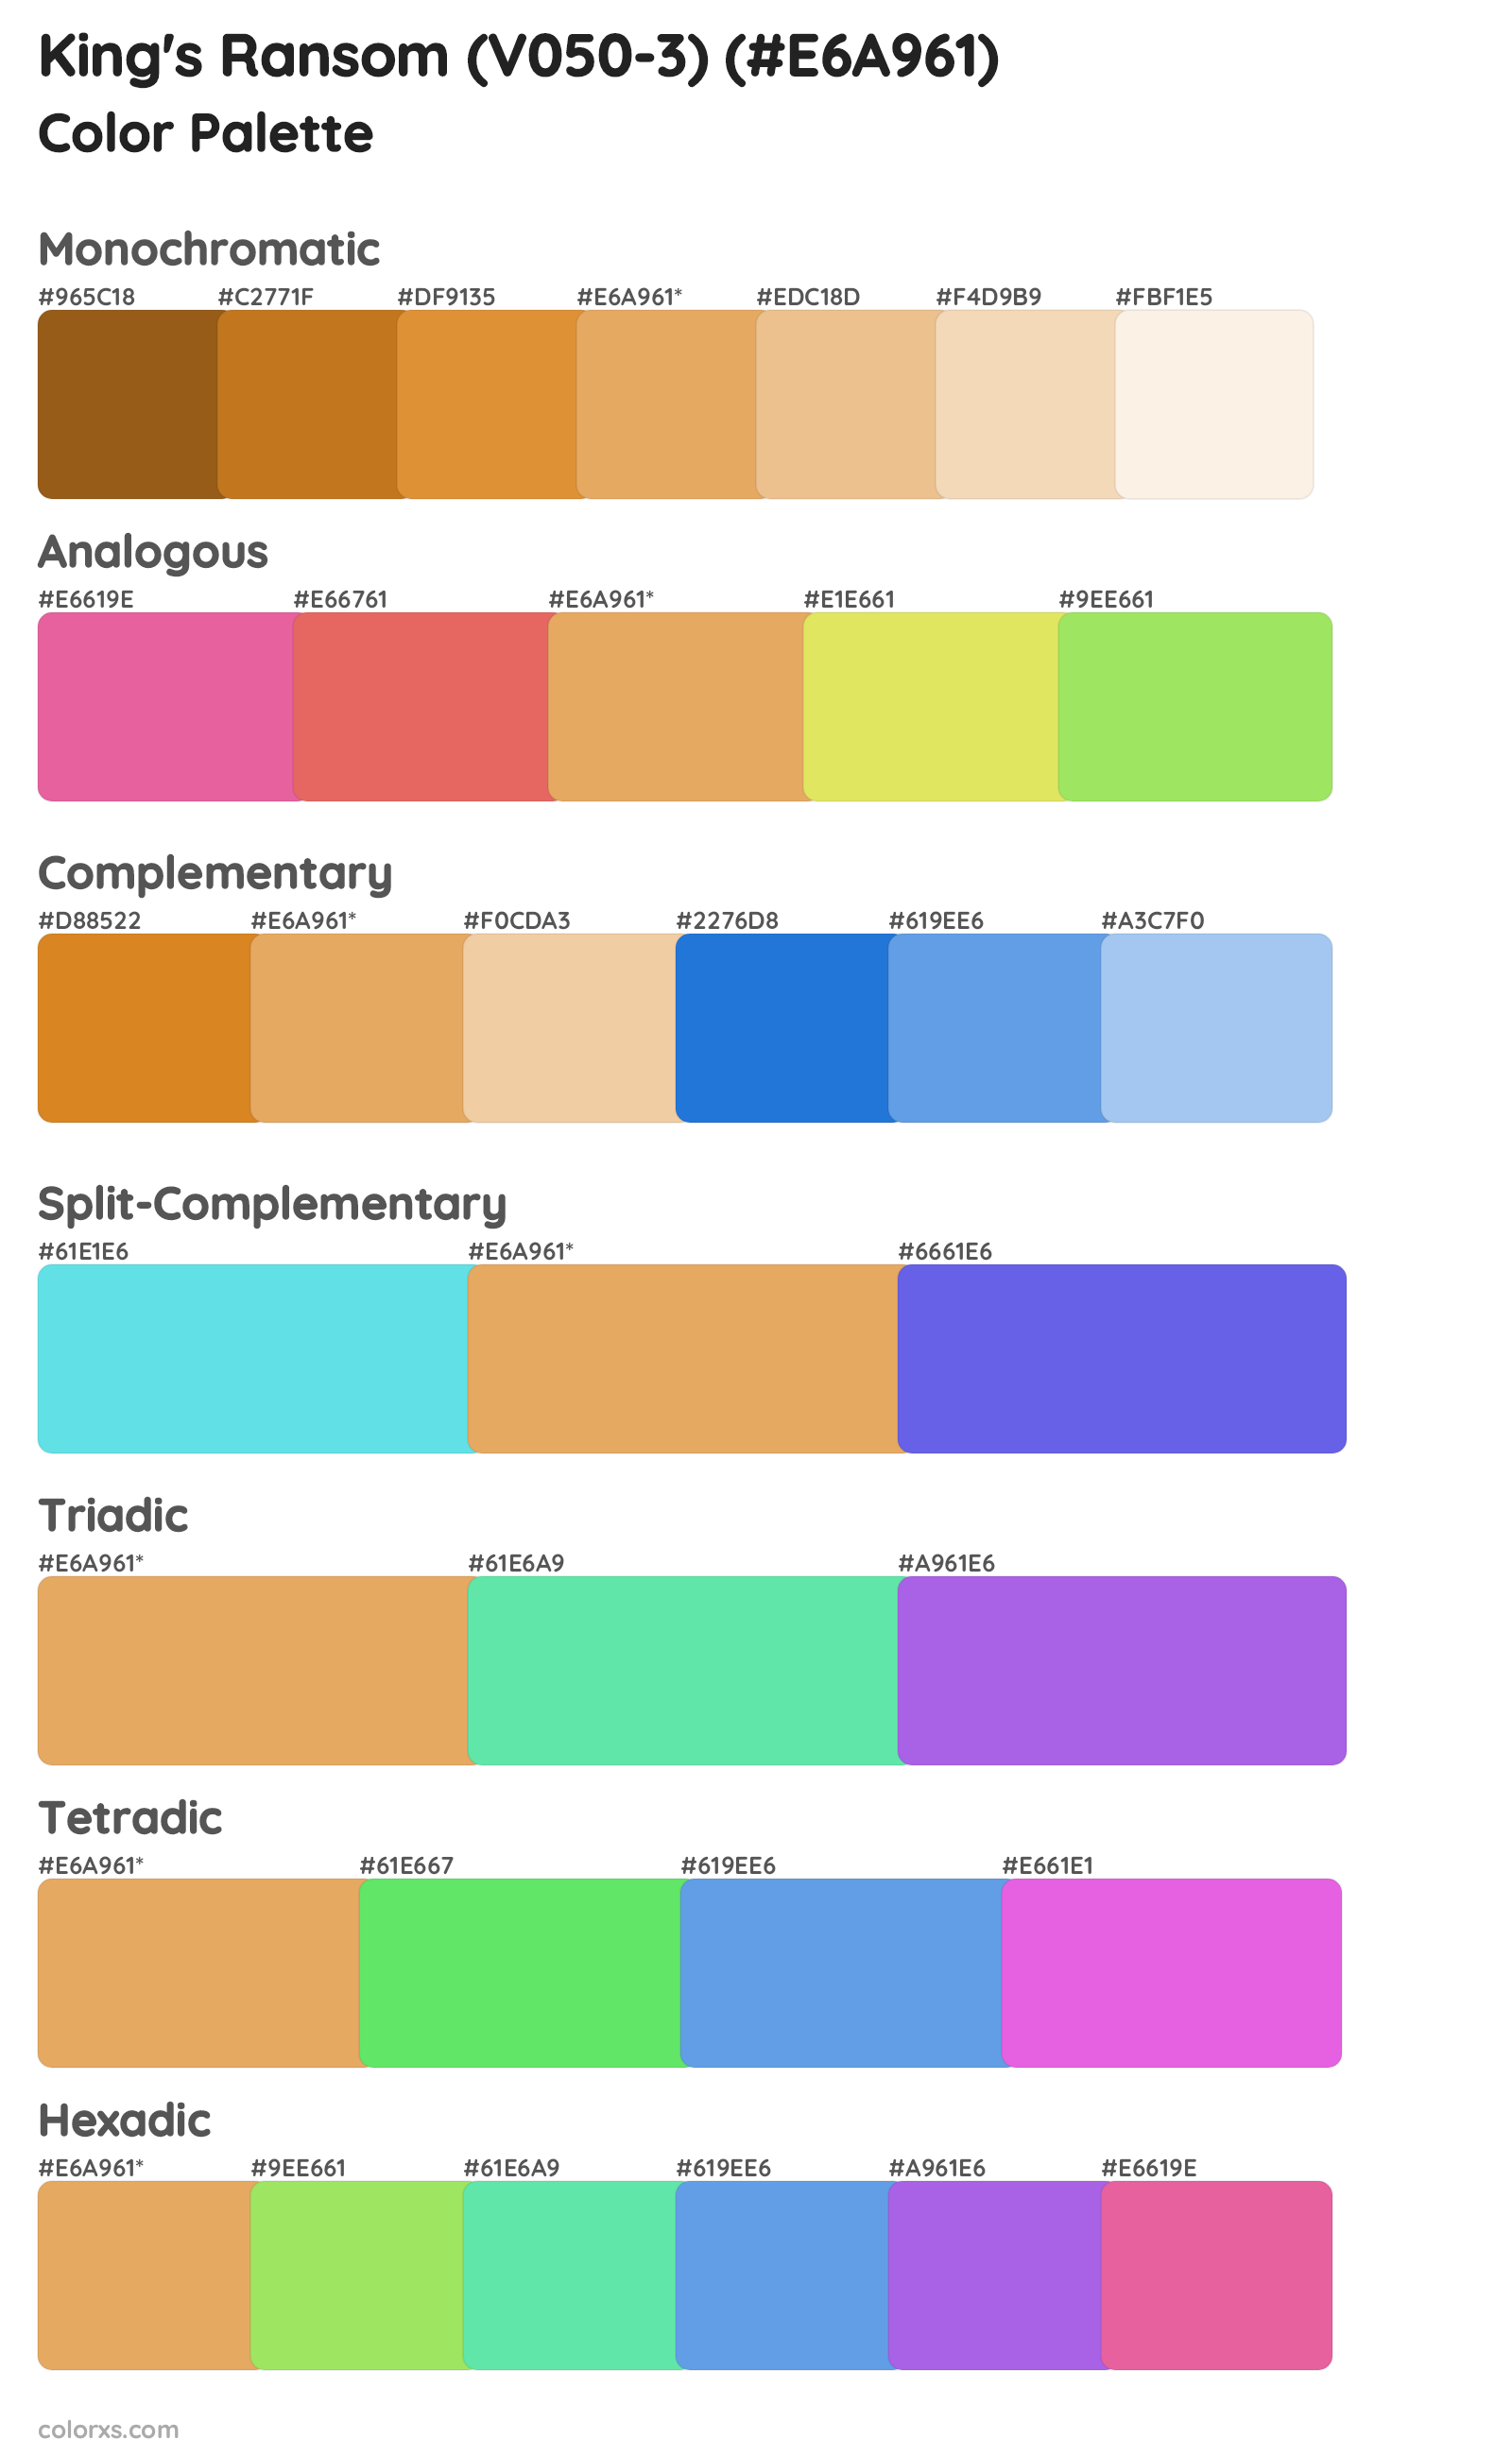 King's Ransom (V050-3) Color Scheme Palettes